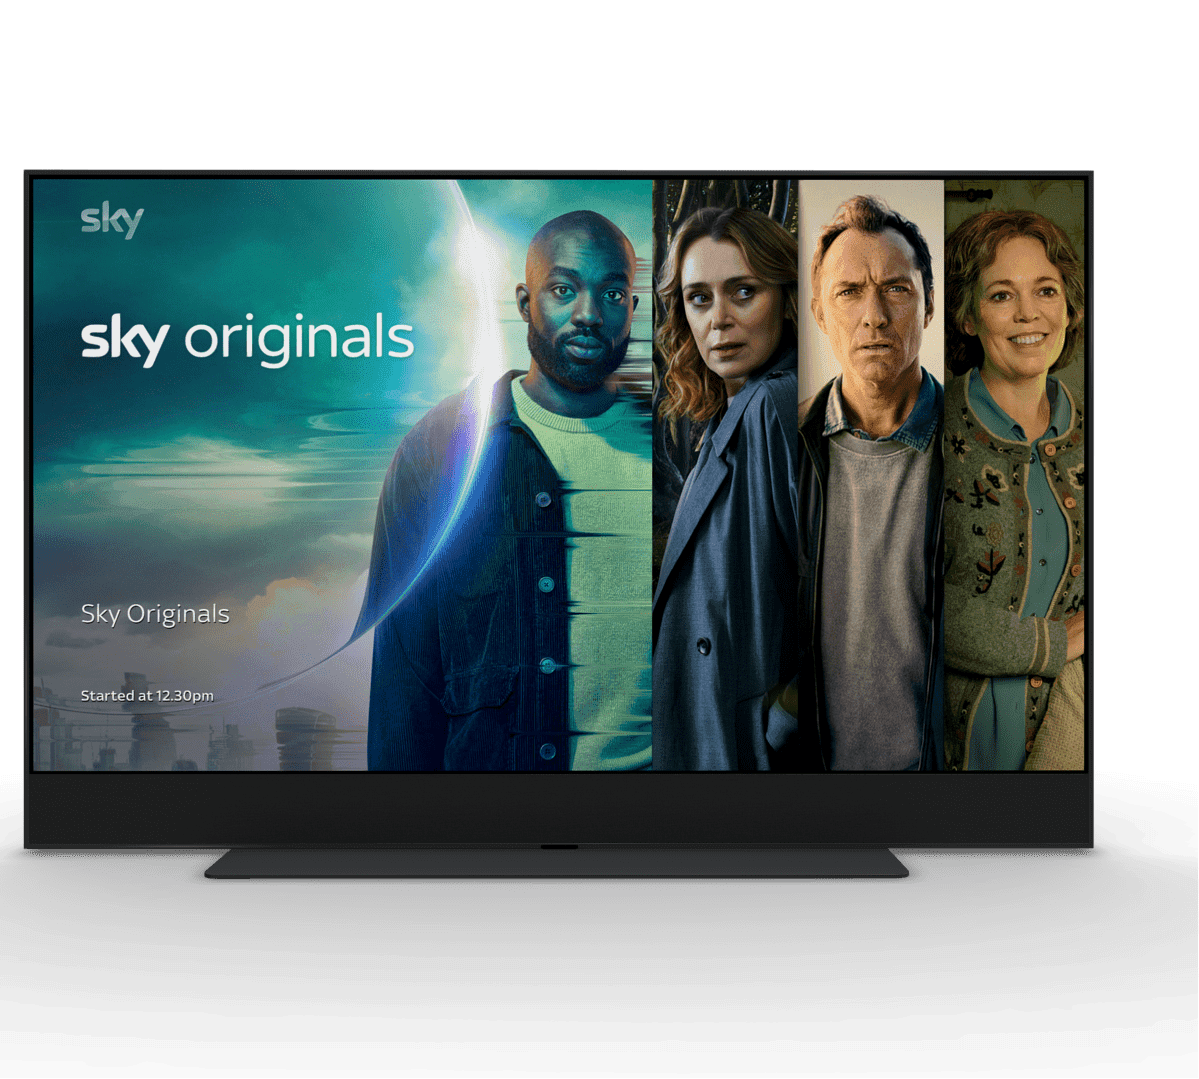 Image of Sky Originals on TV